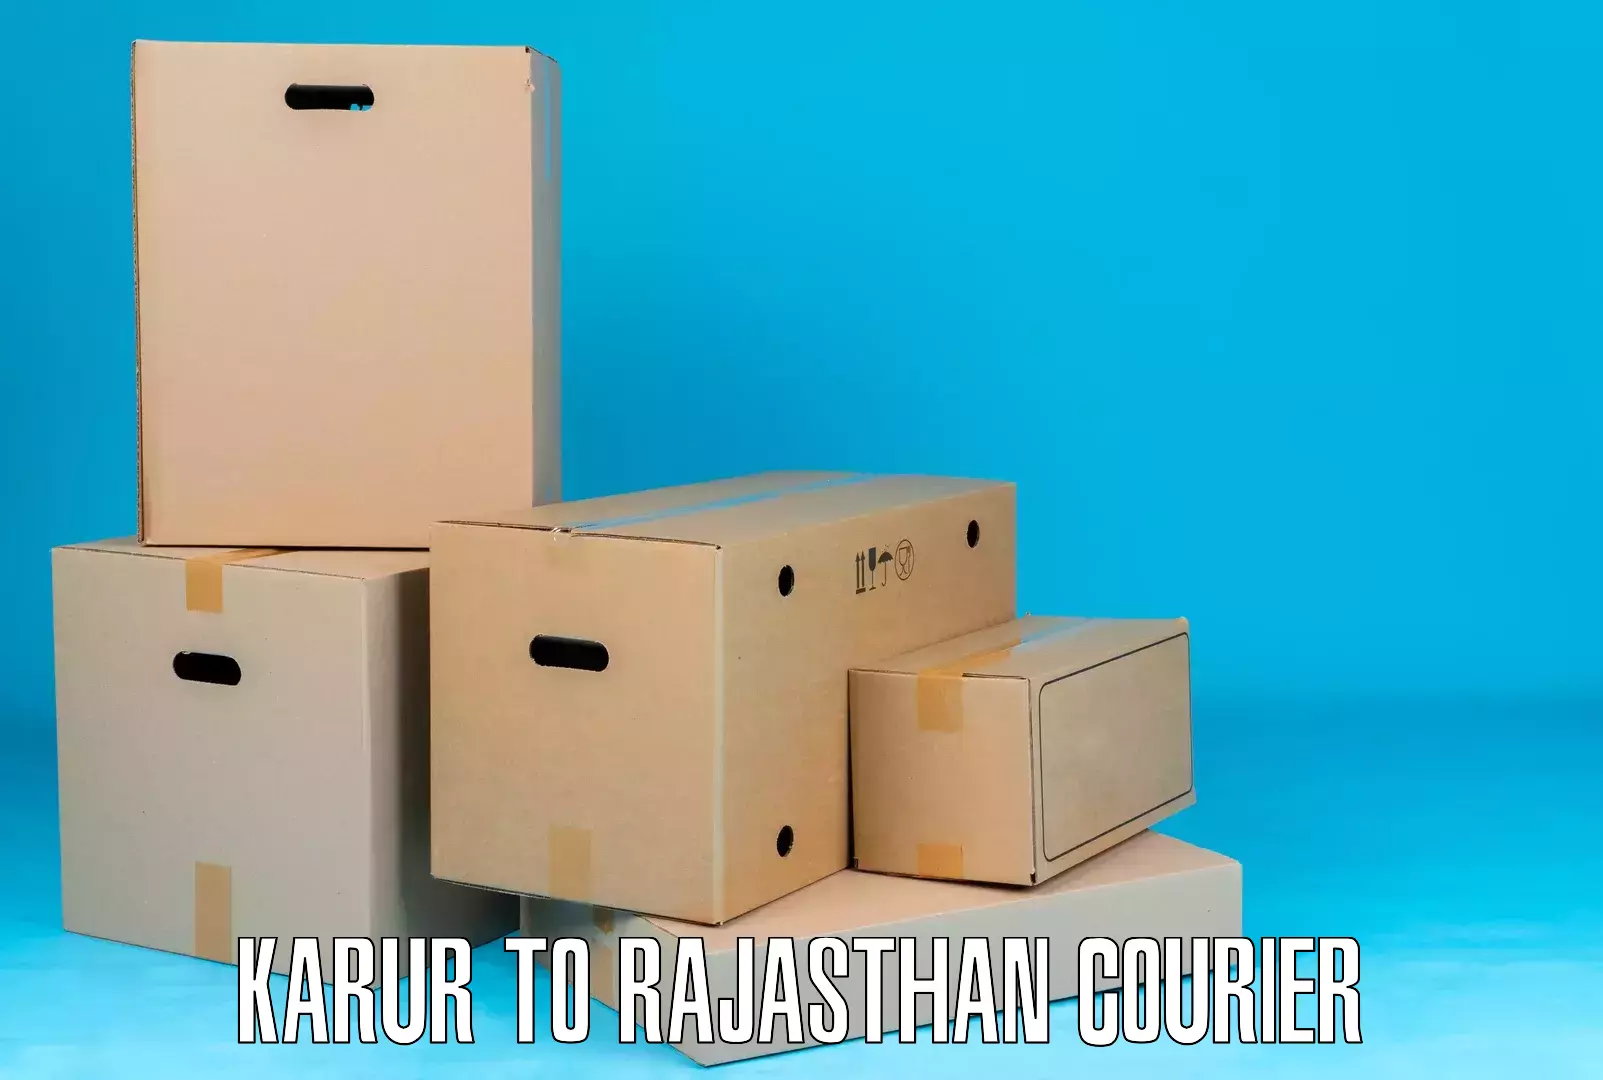 Logistics service provider Karur to Alwar